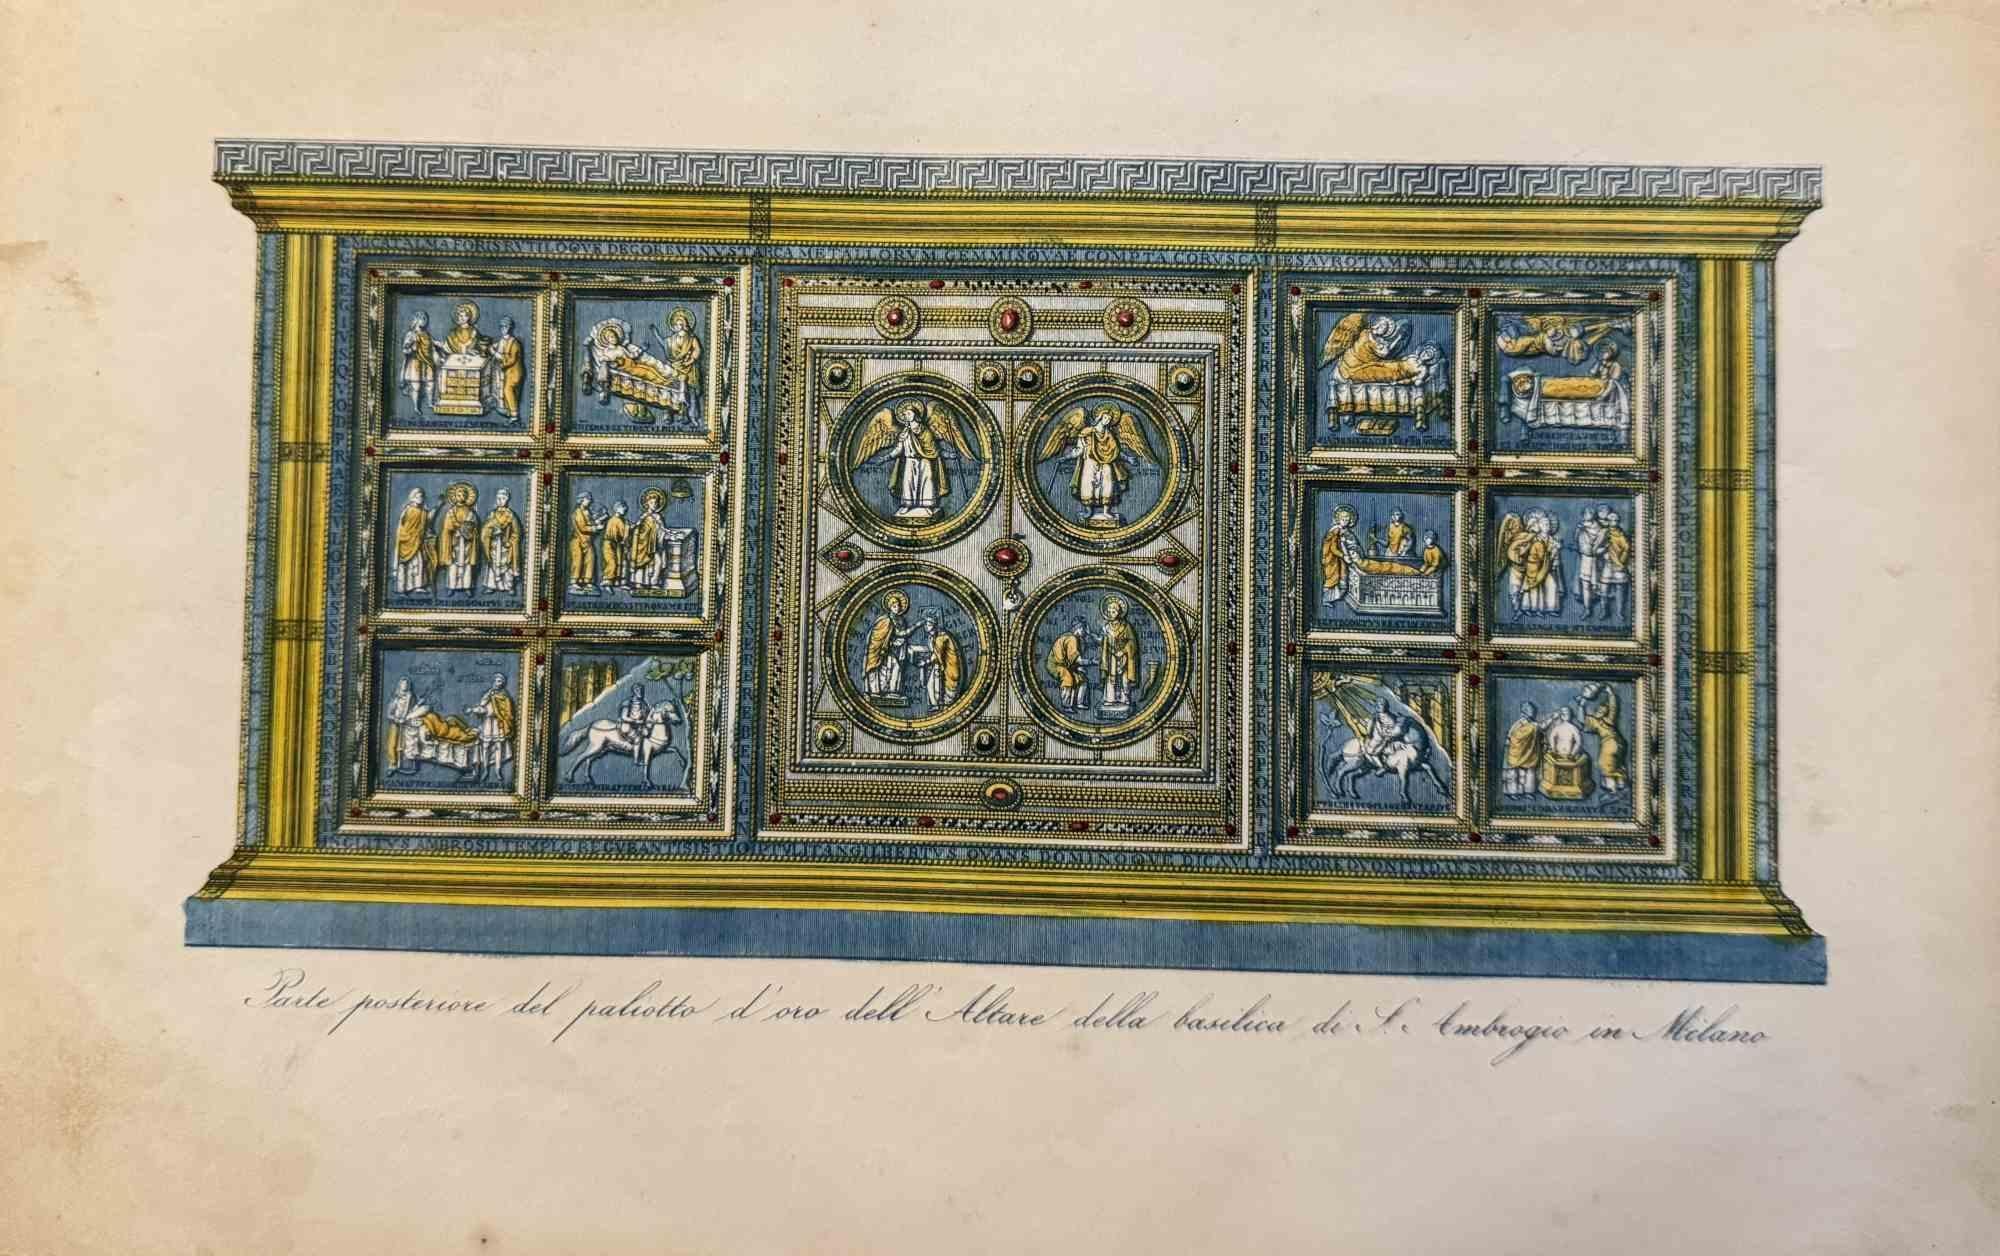 Uses and Customs - Basilica of Sant'Ambrogio - Lithograph - 1862